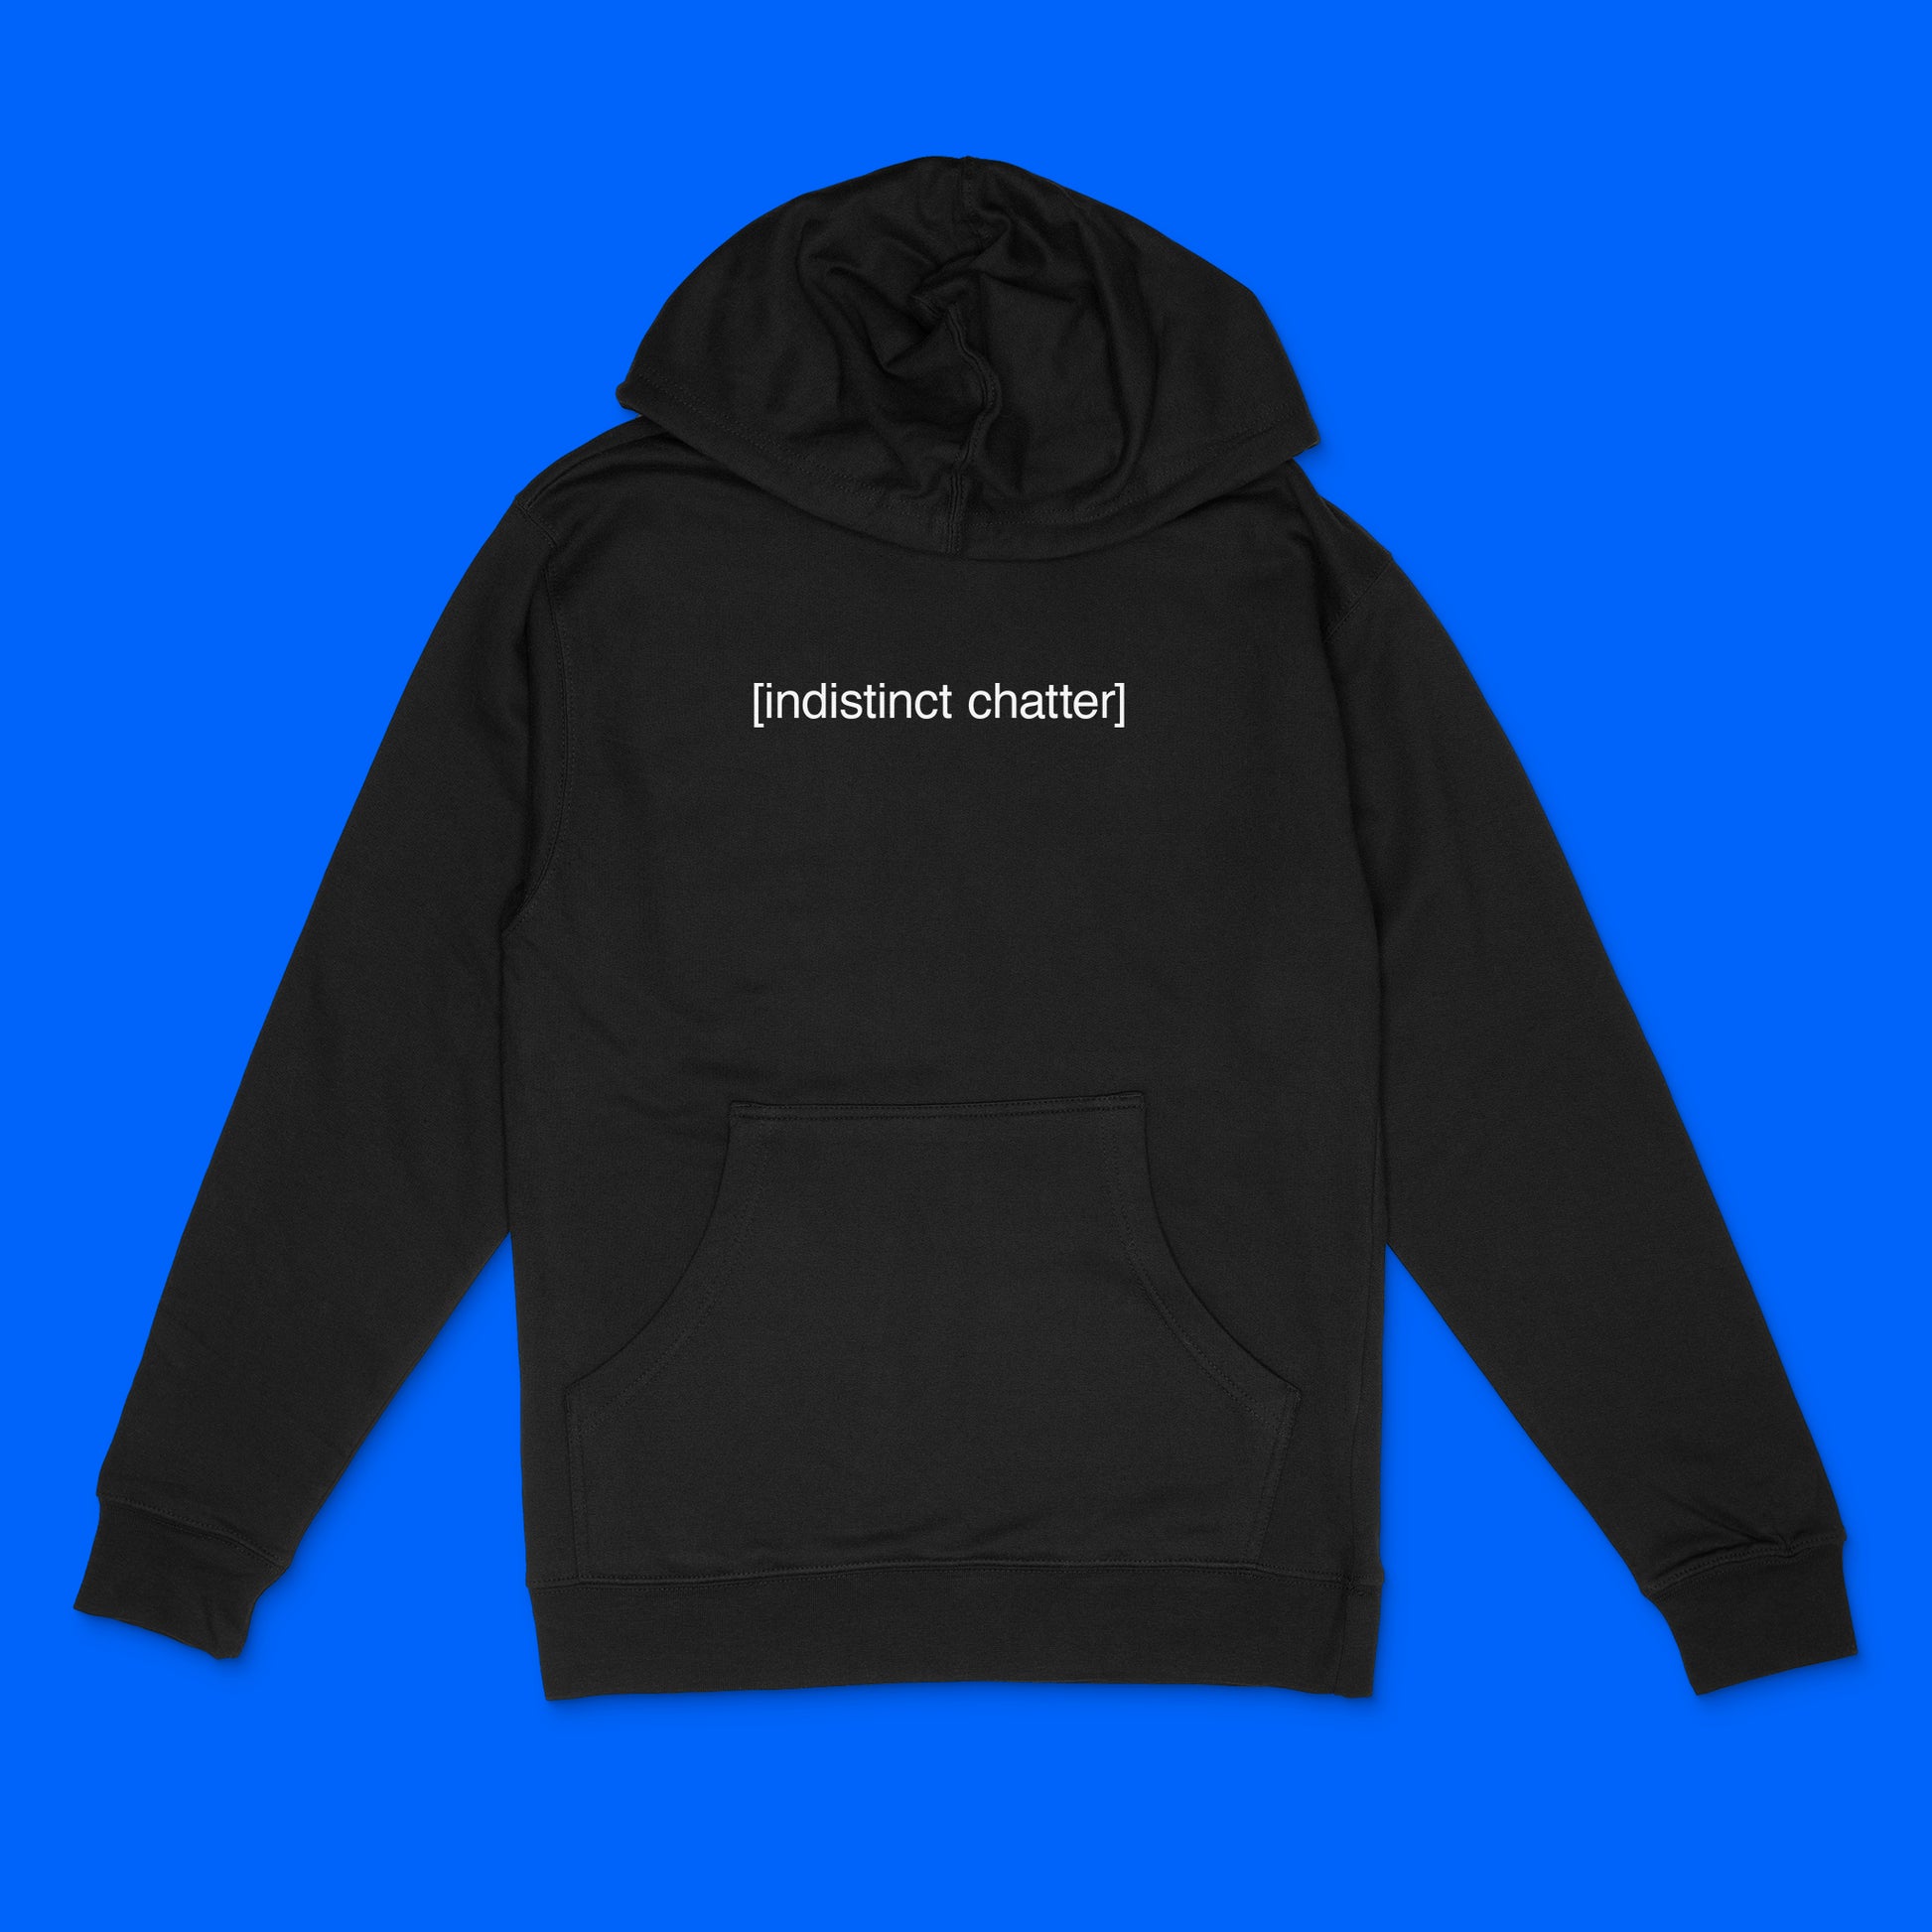 Black unisex hooded sweatshirt with [indistinct chatter] text in white by BBJ / Glitter Garage